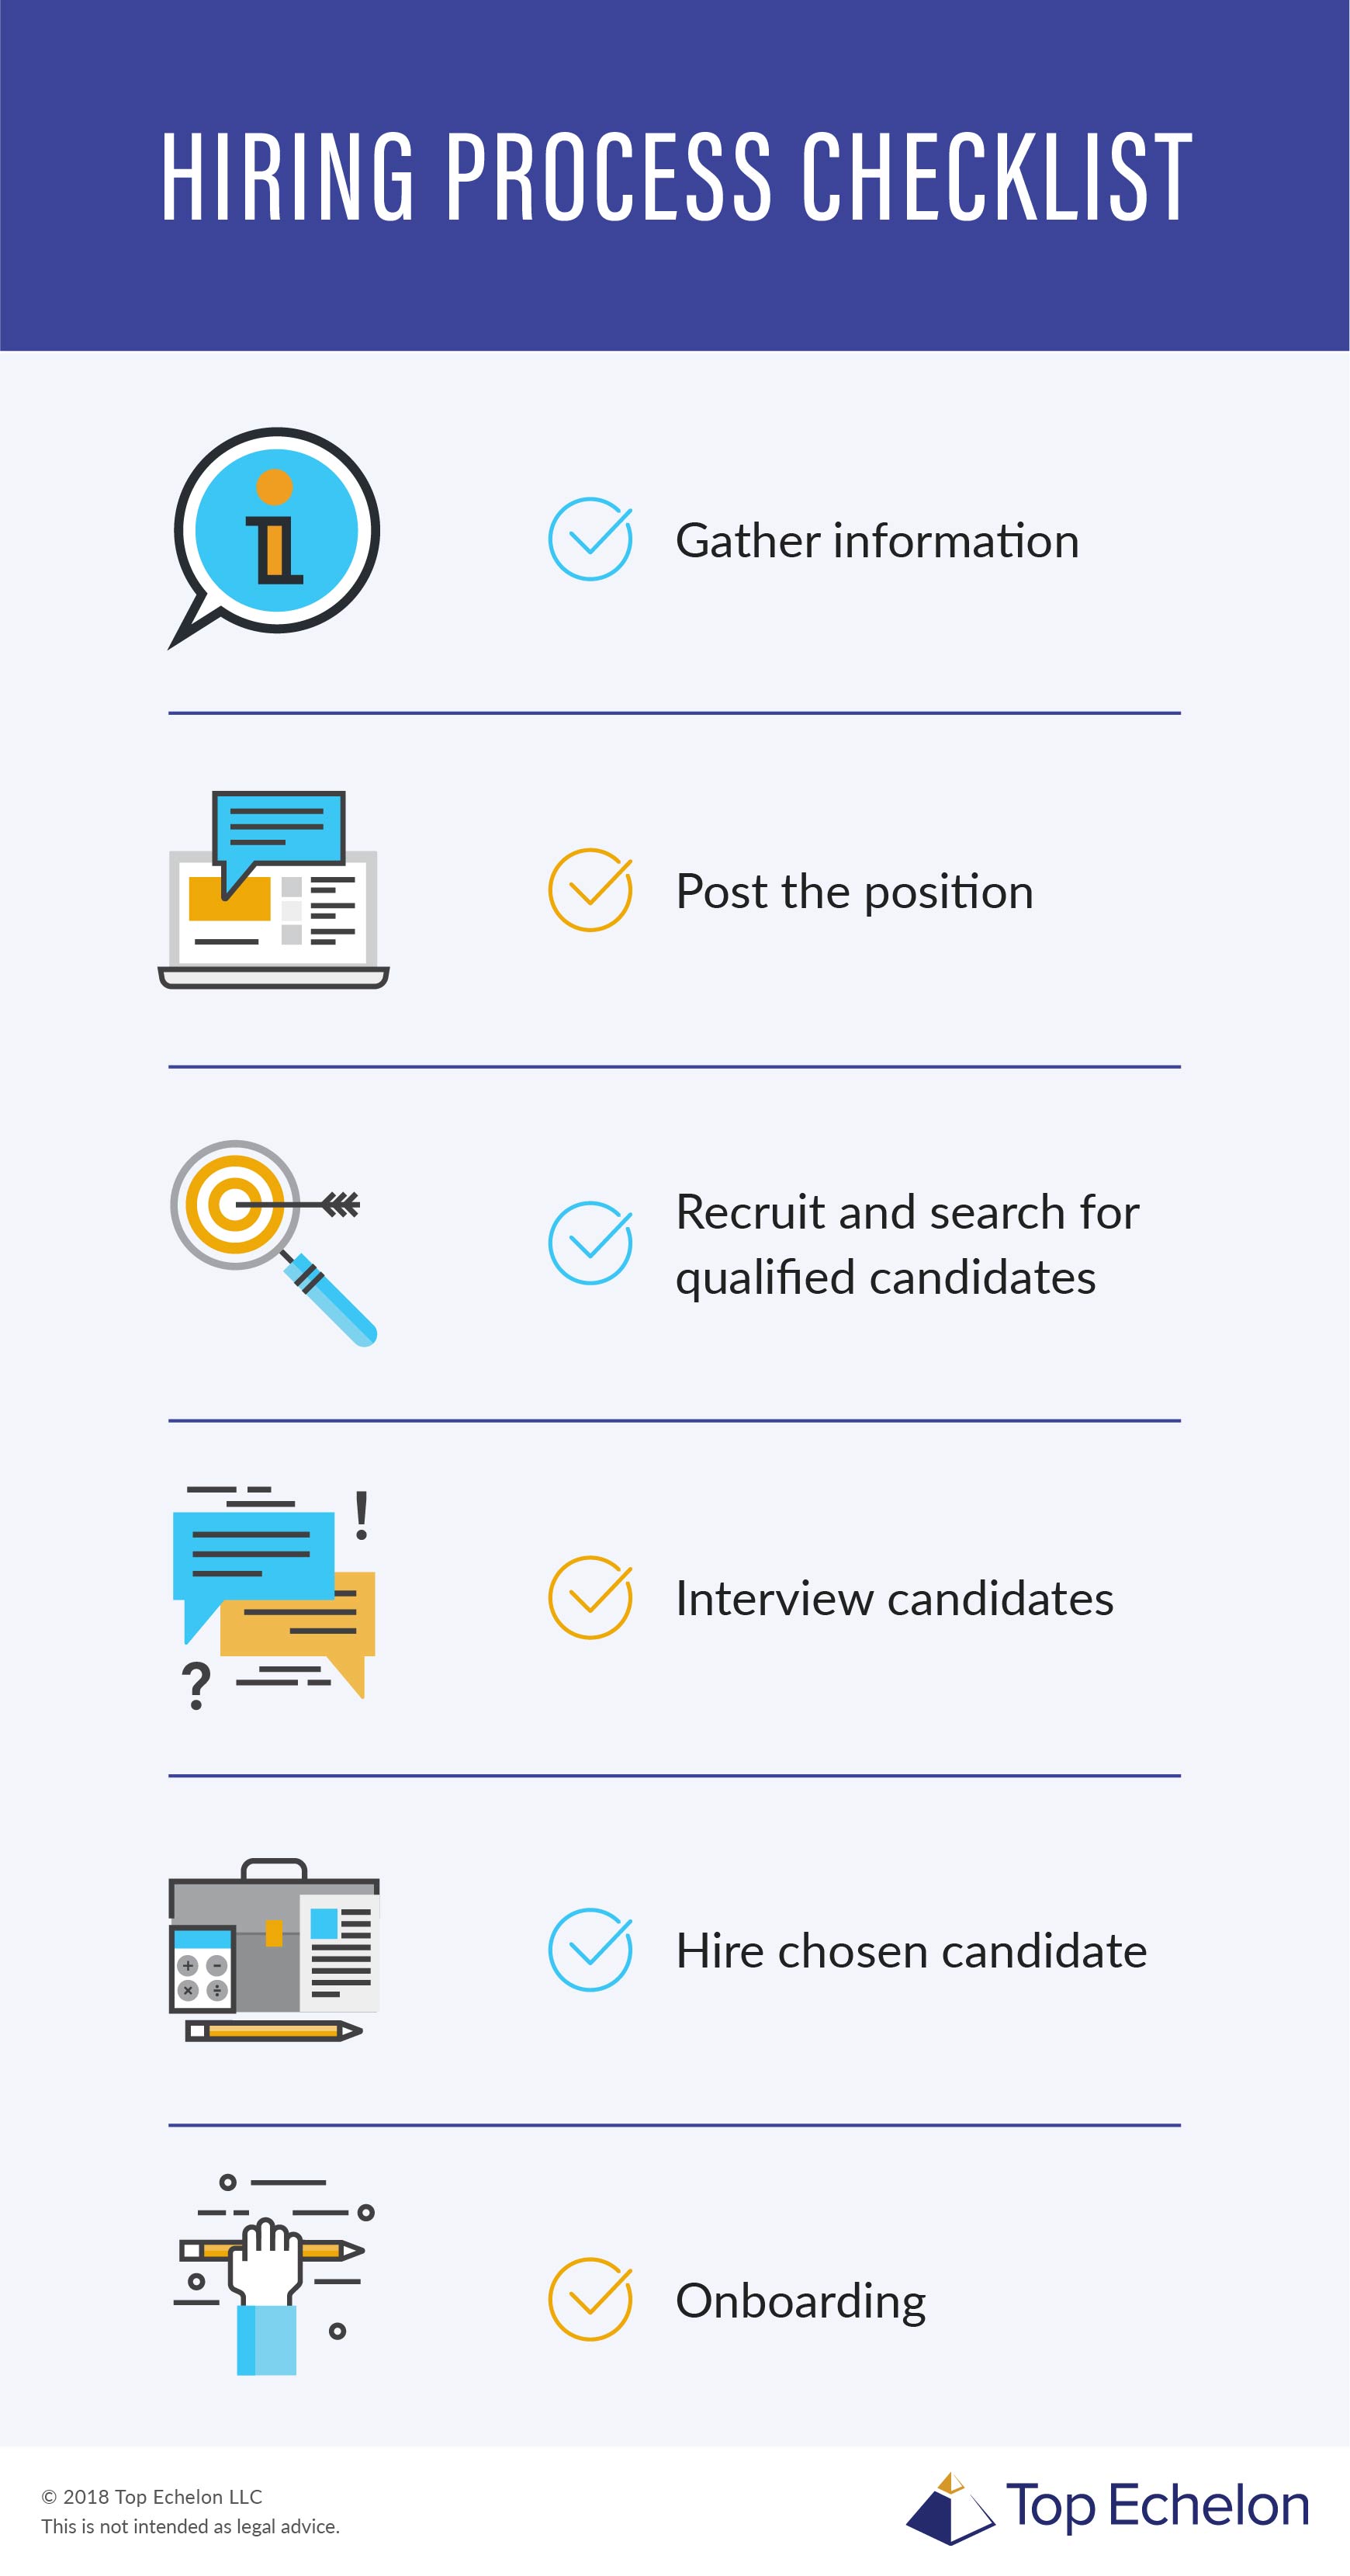 hiring process checklist